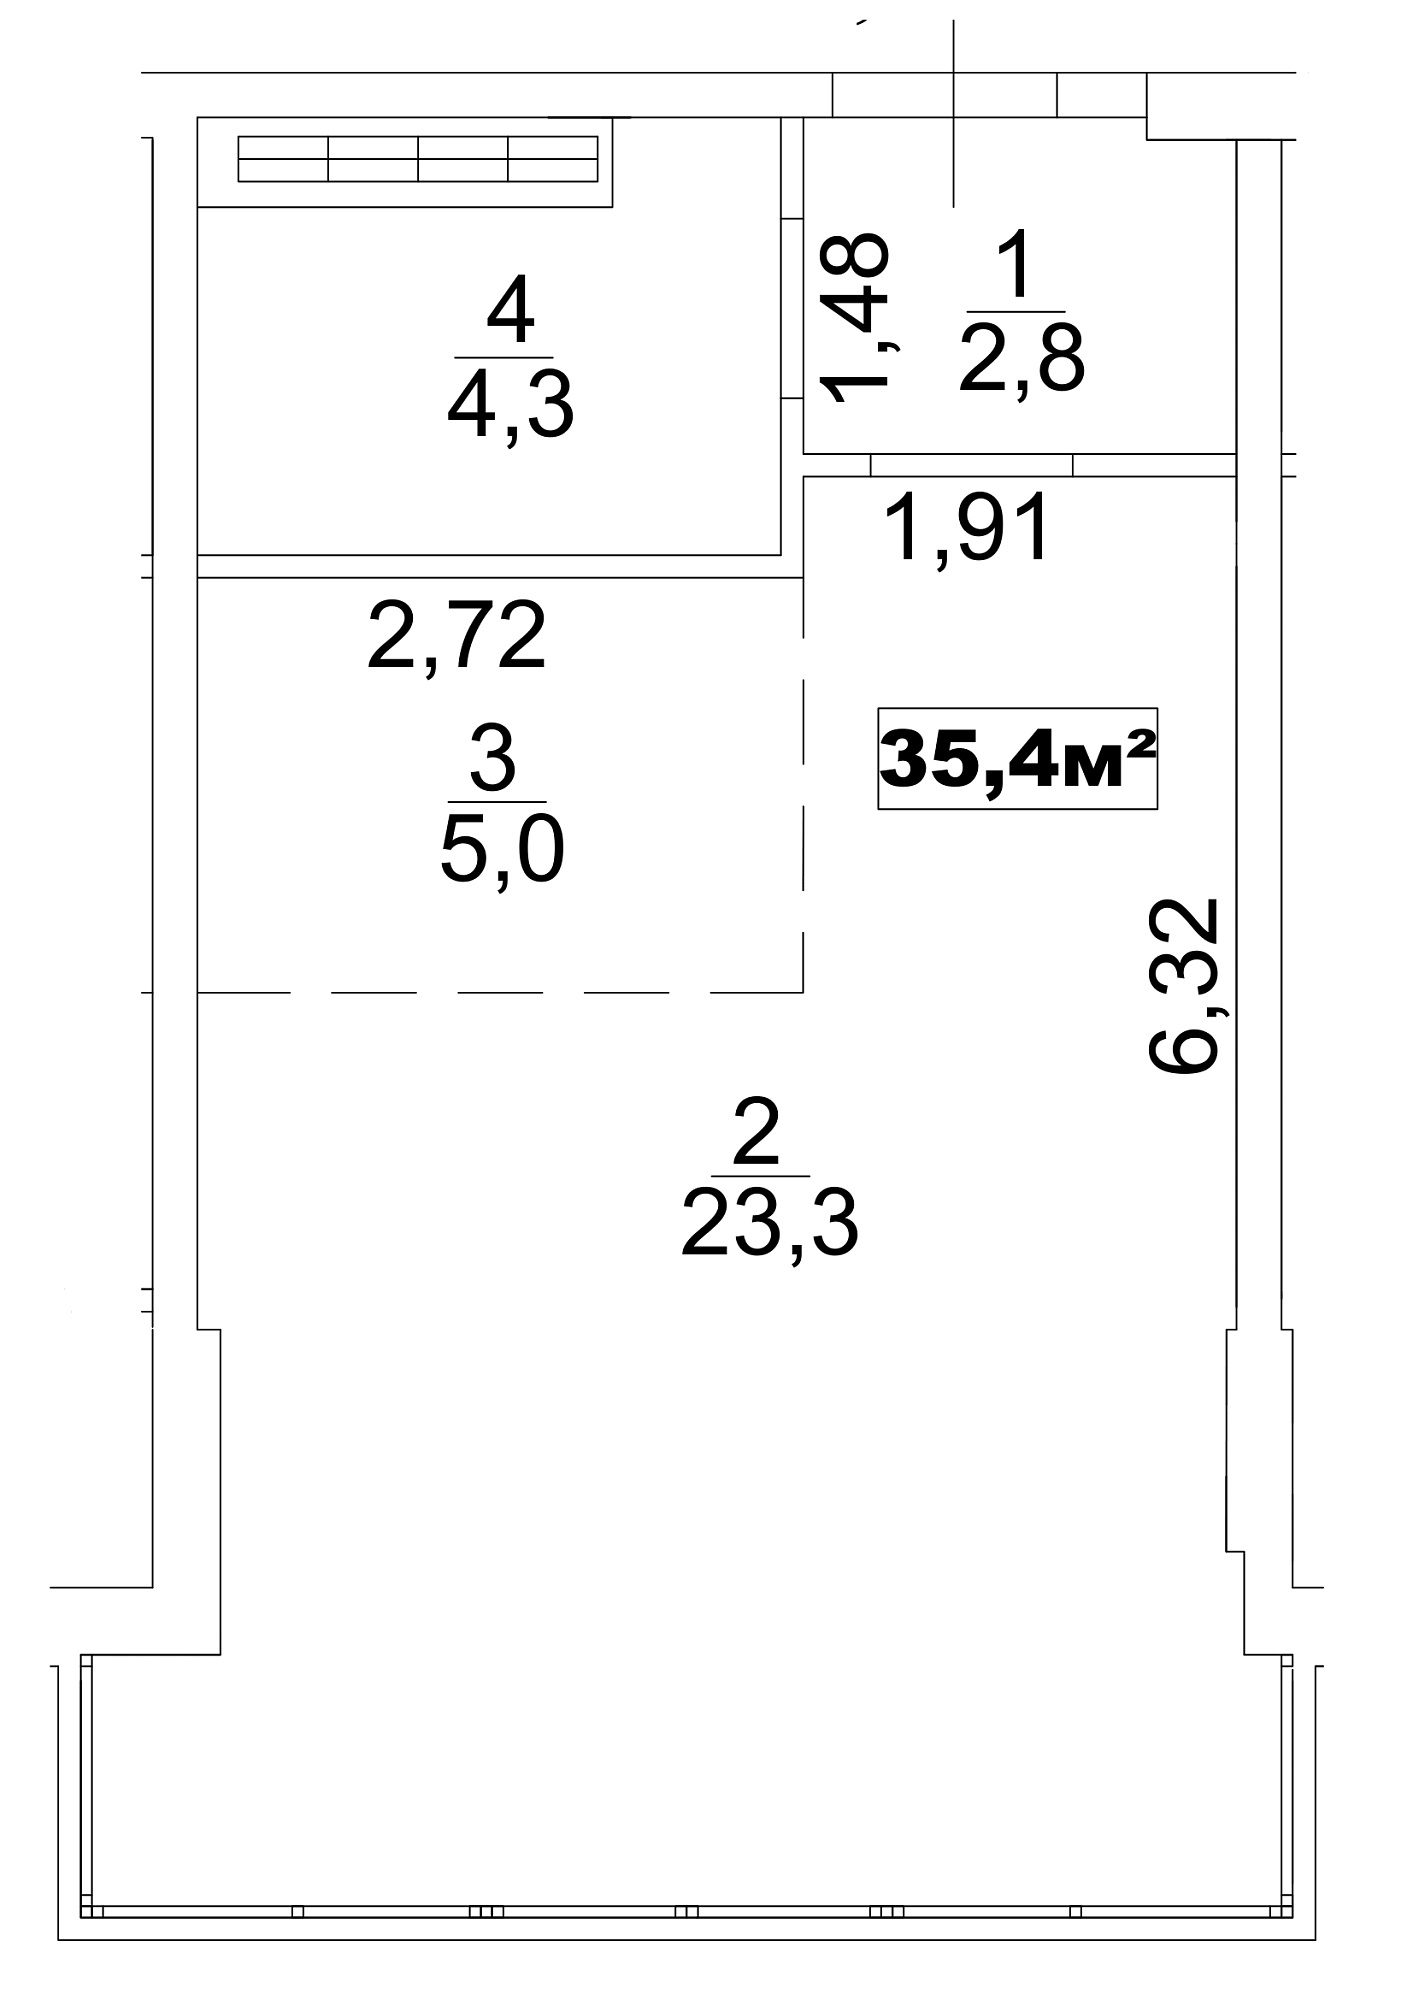 Планировка Smart-квартира площей 35.4м2, AB-13-10/0079б.